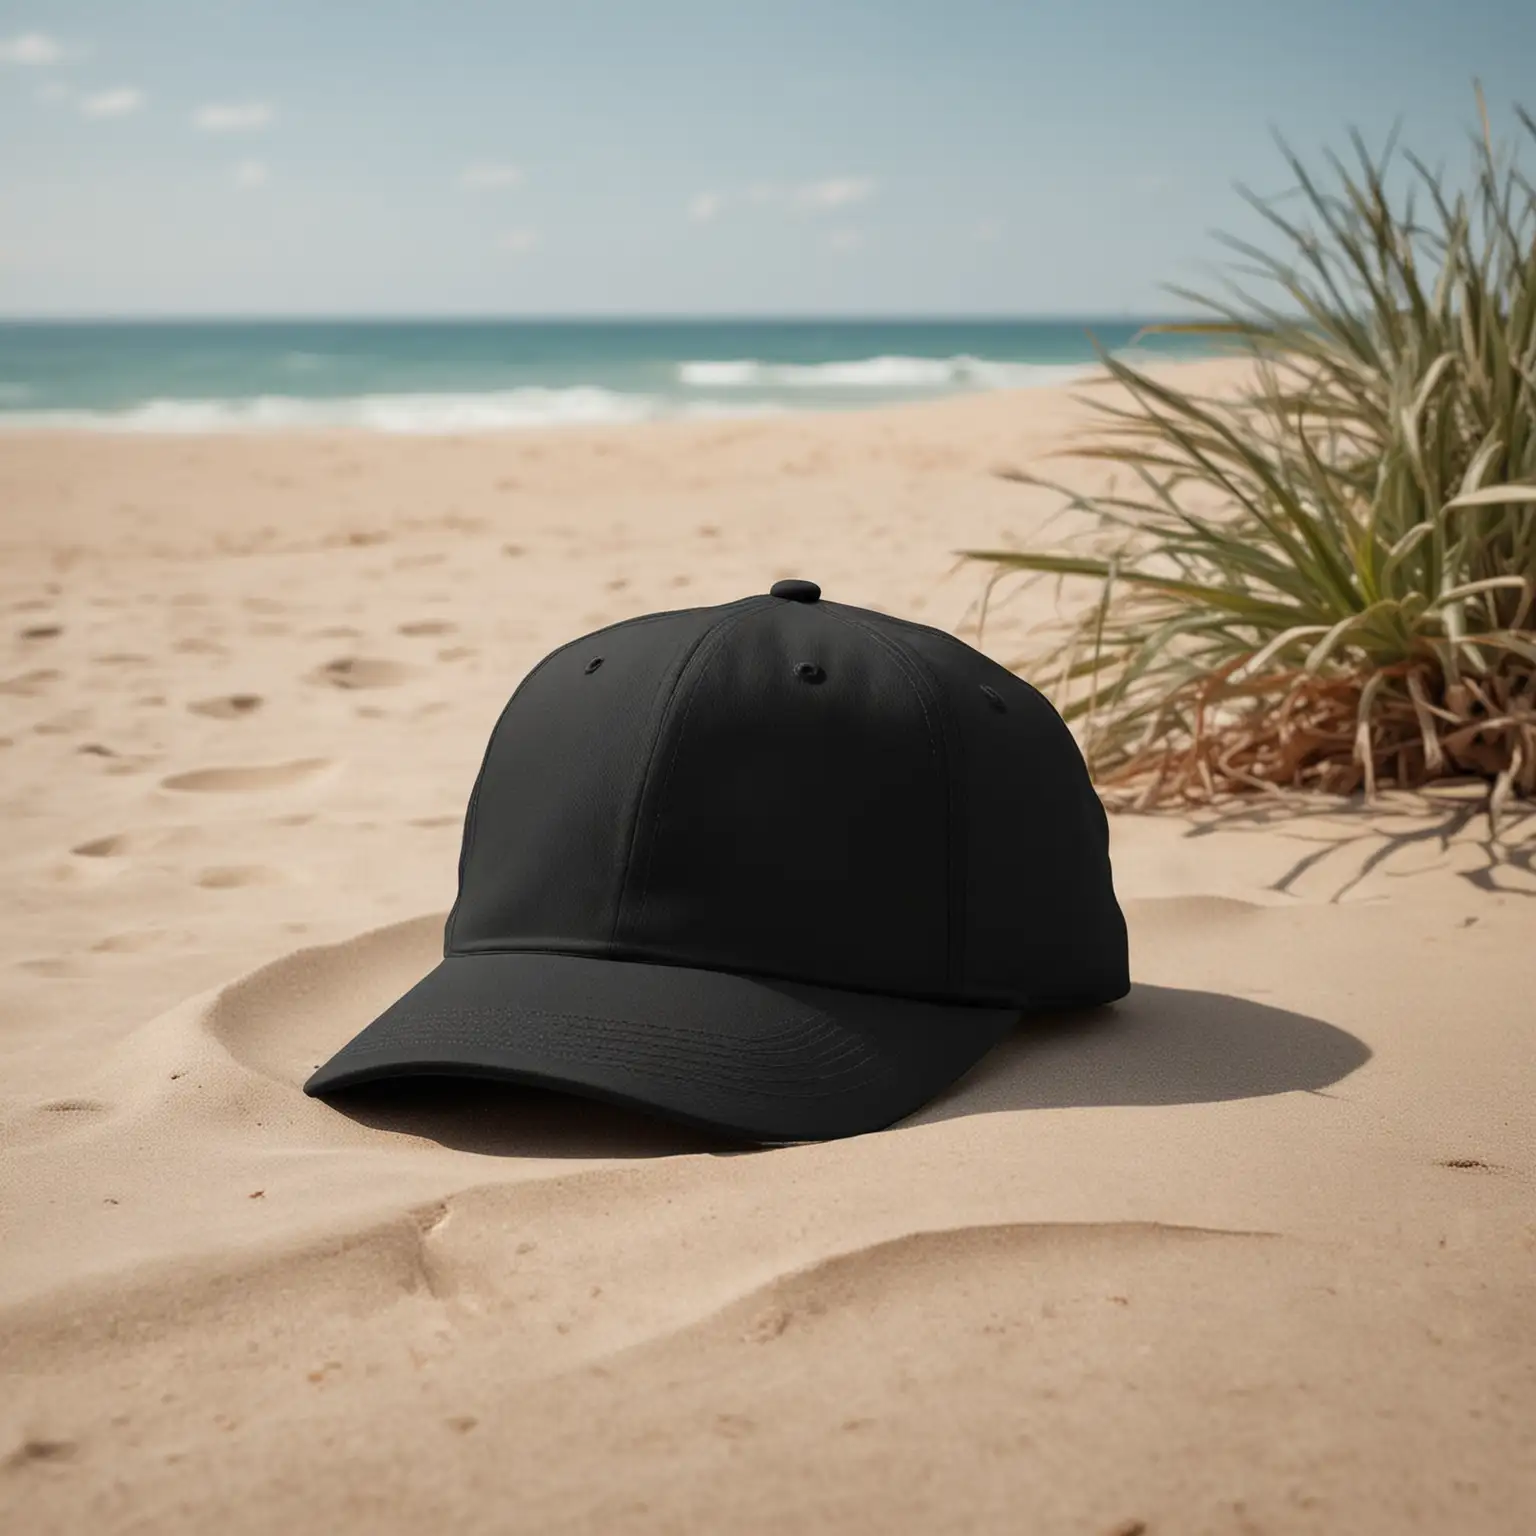 Relaxed Male Model Wearing Black Baseball Hat on Beach